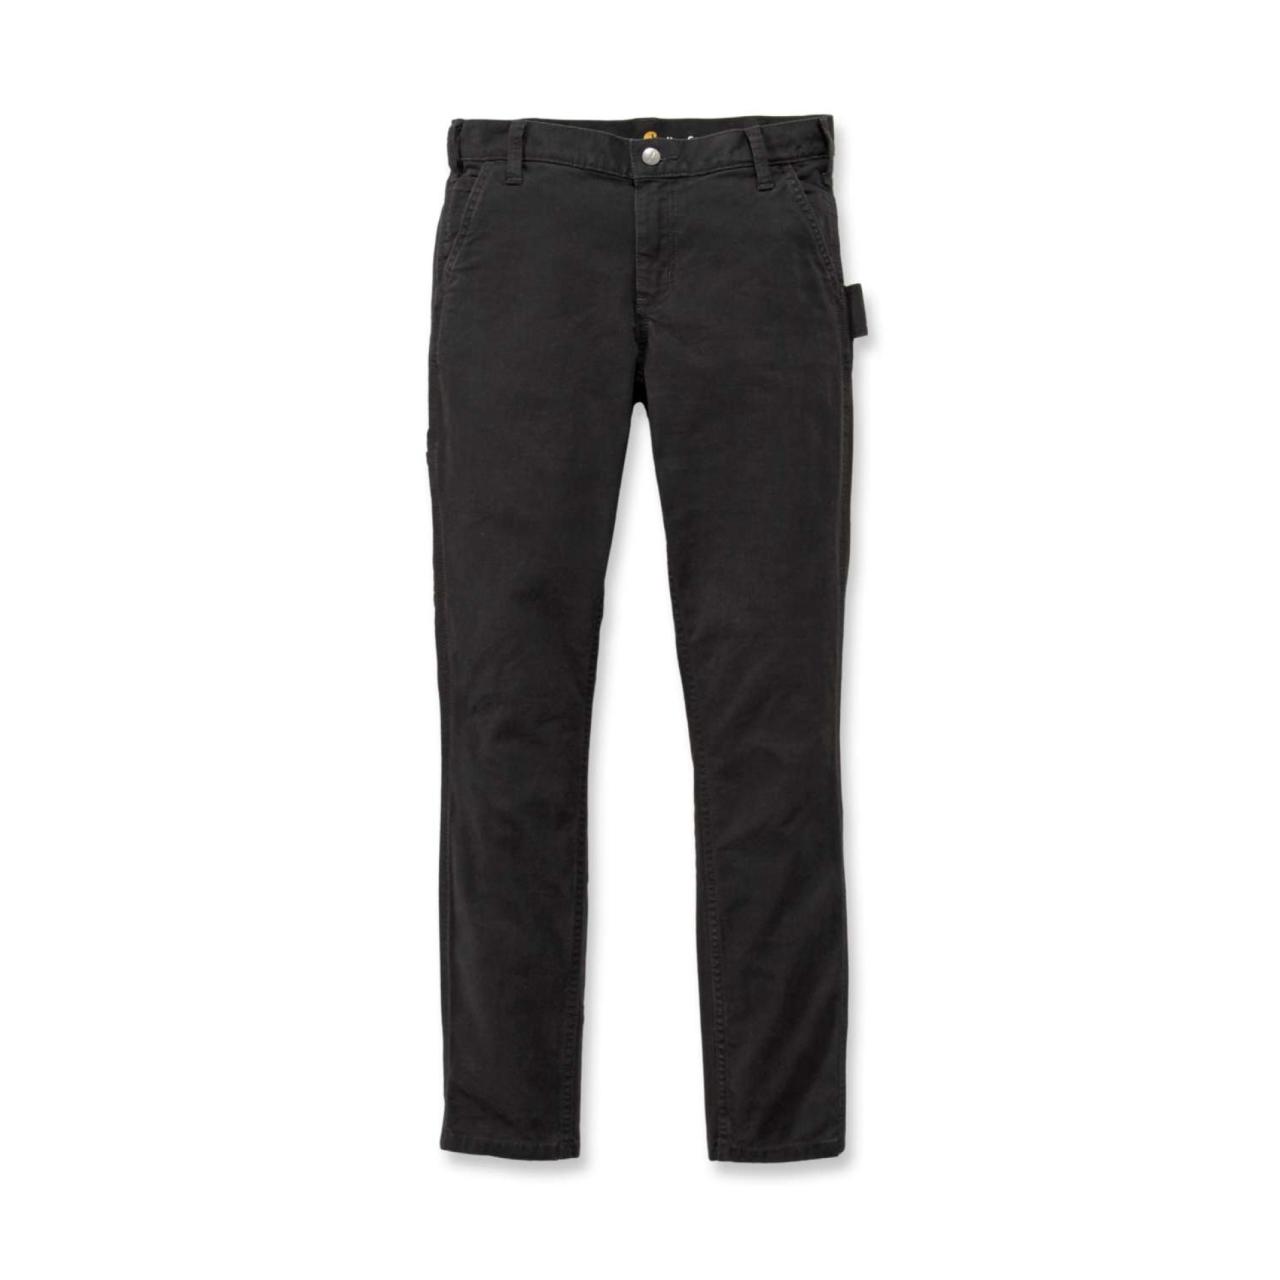 Slim-Fit Crawford Pant, Black - Pharsol Protect - Workwear